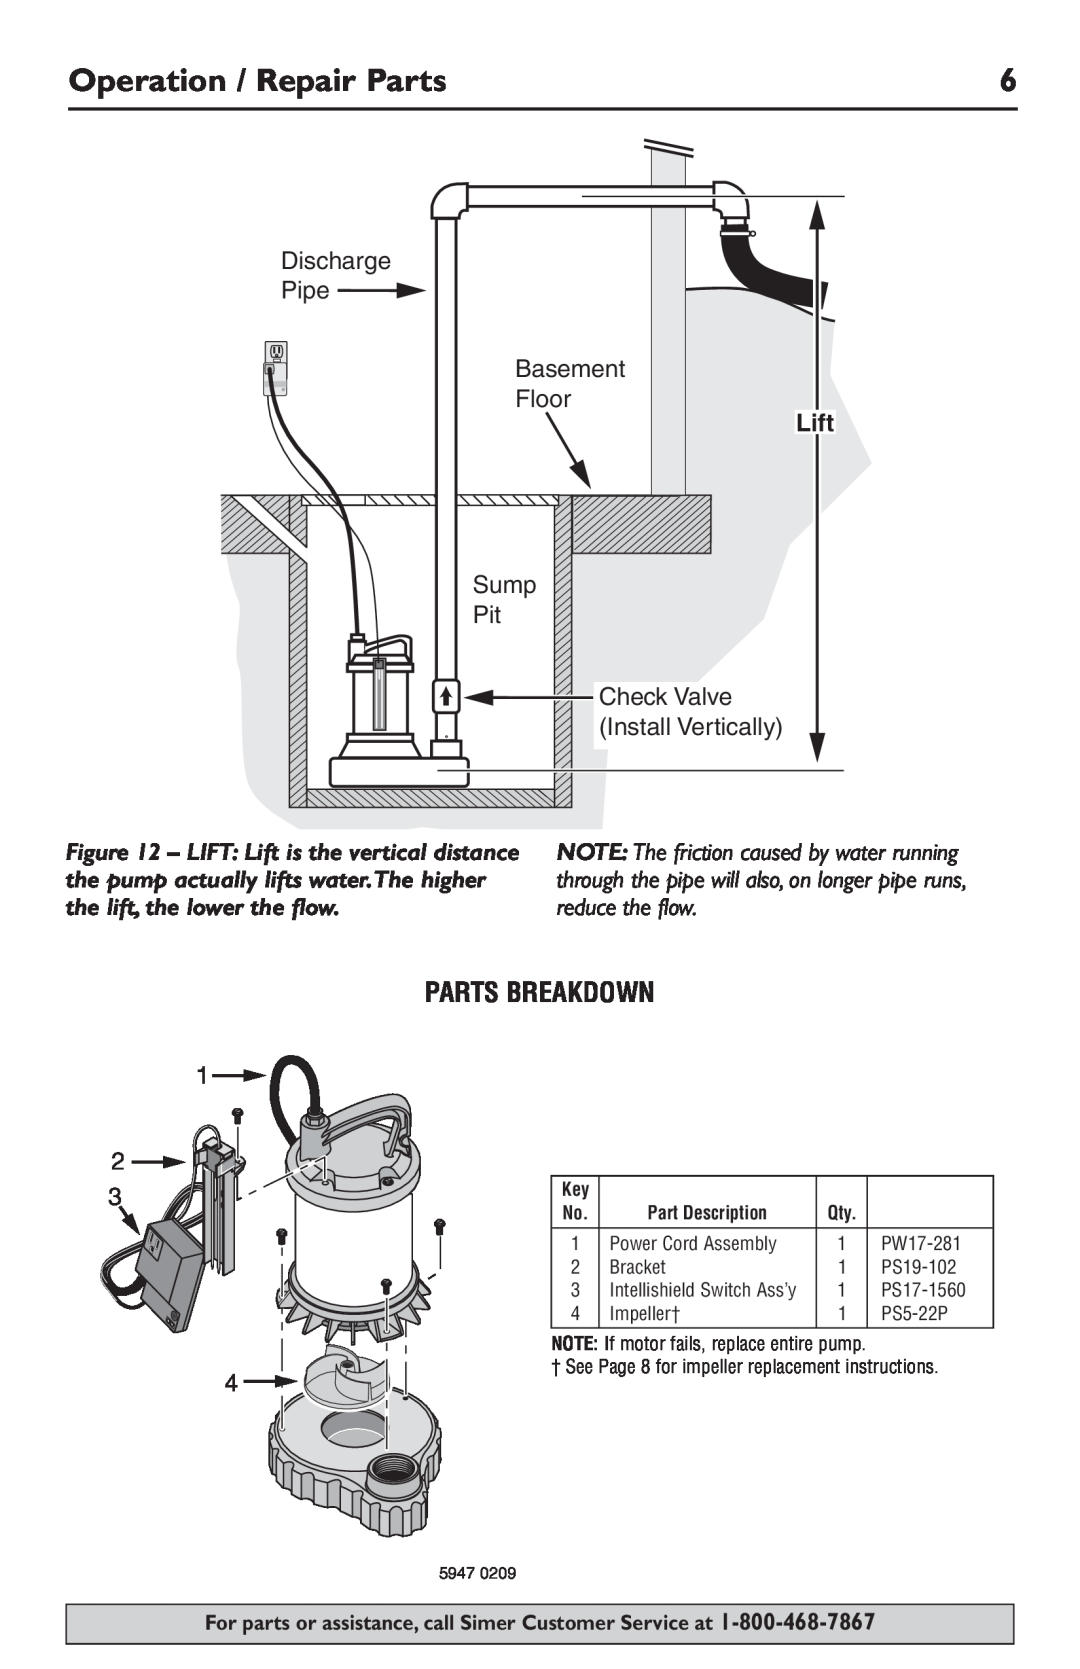 Simer Pumps 3989 Operation / Repair Parts, Parts Breakdown, Discharge Pipe, Basement, Floor, Lift, Sump, Check Valve 